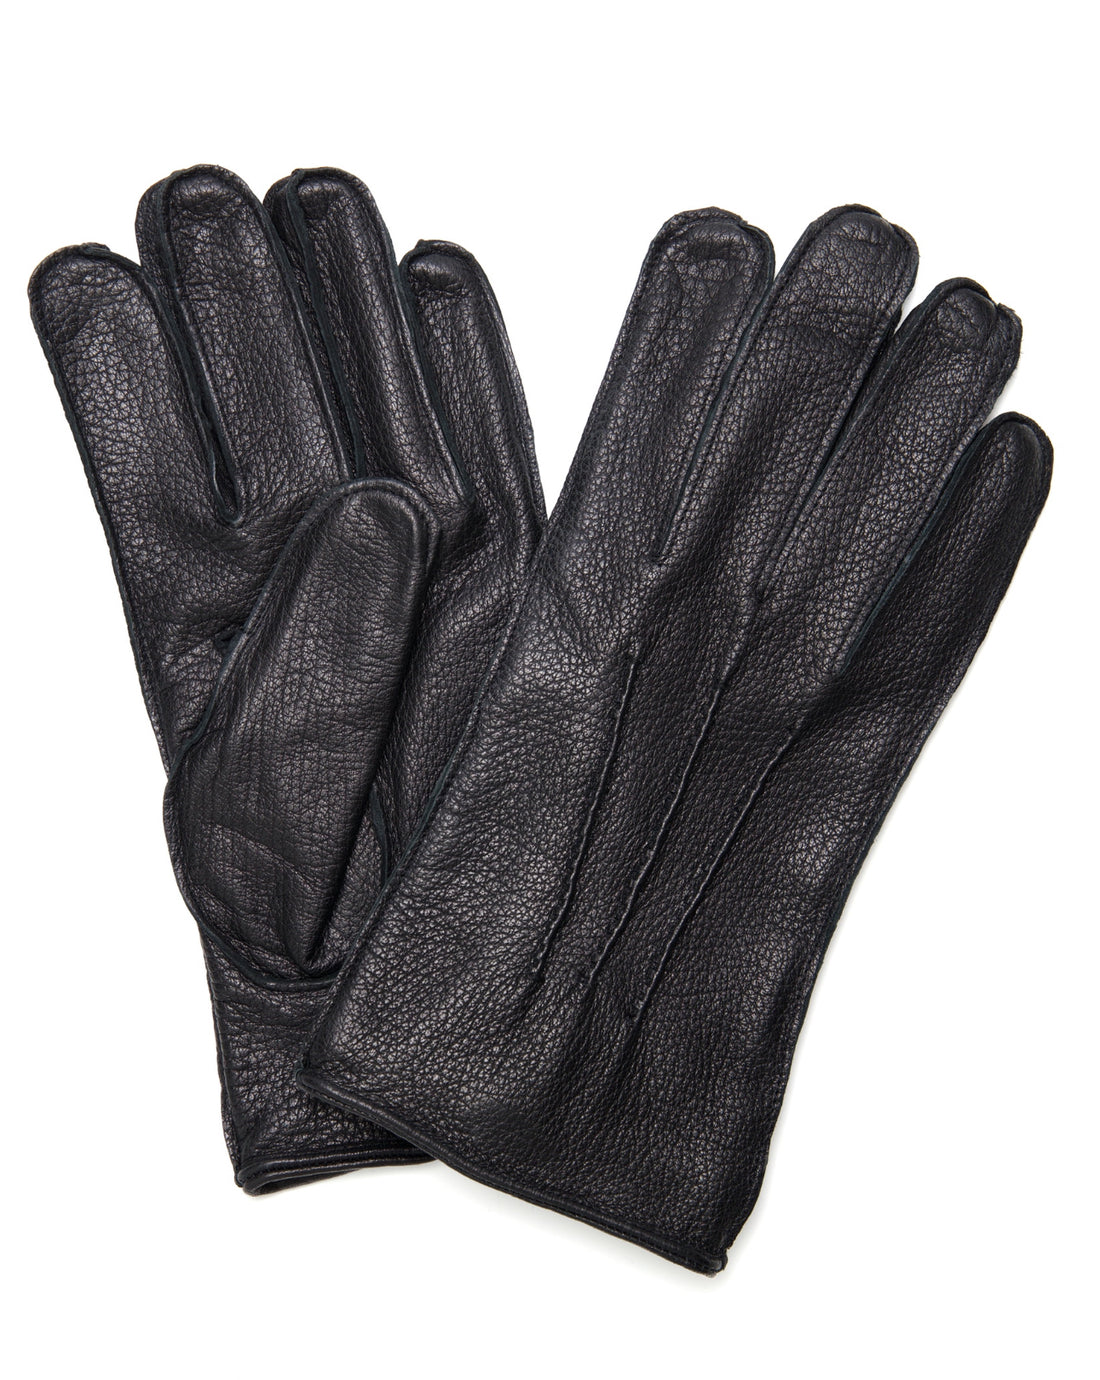 Lambskin Leather Gloves - Black Textured - Gloves by Urbbana